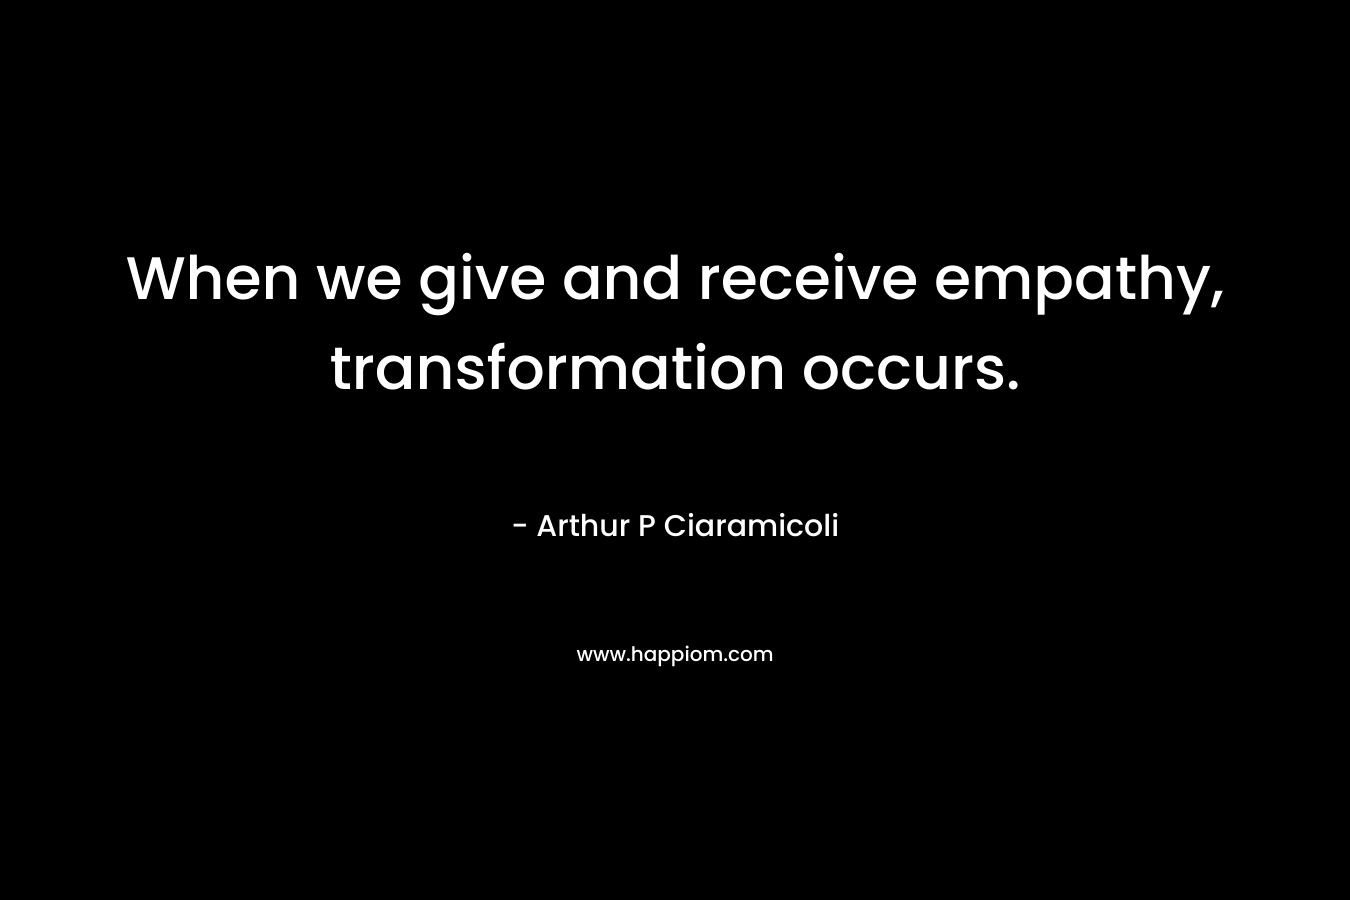 When we give and receive empathy, transformation occurs. – Arthur P Ciaramicoli